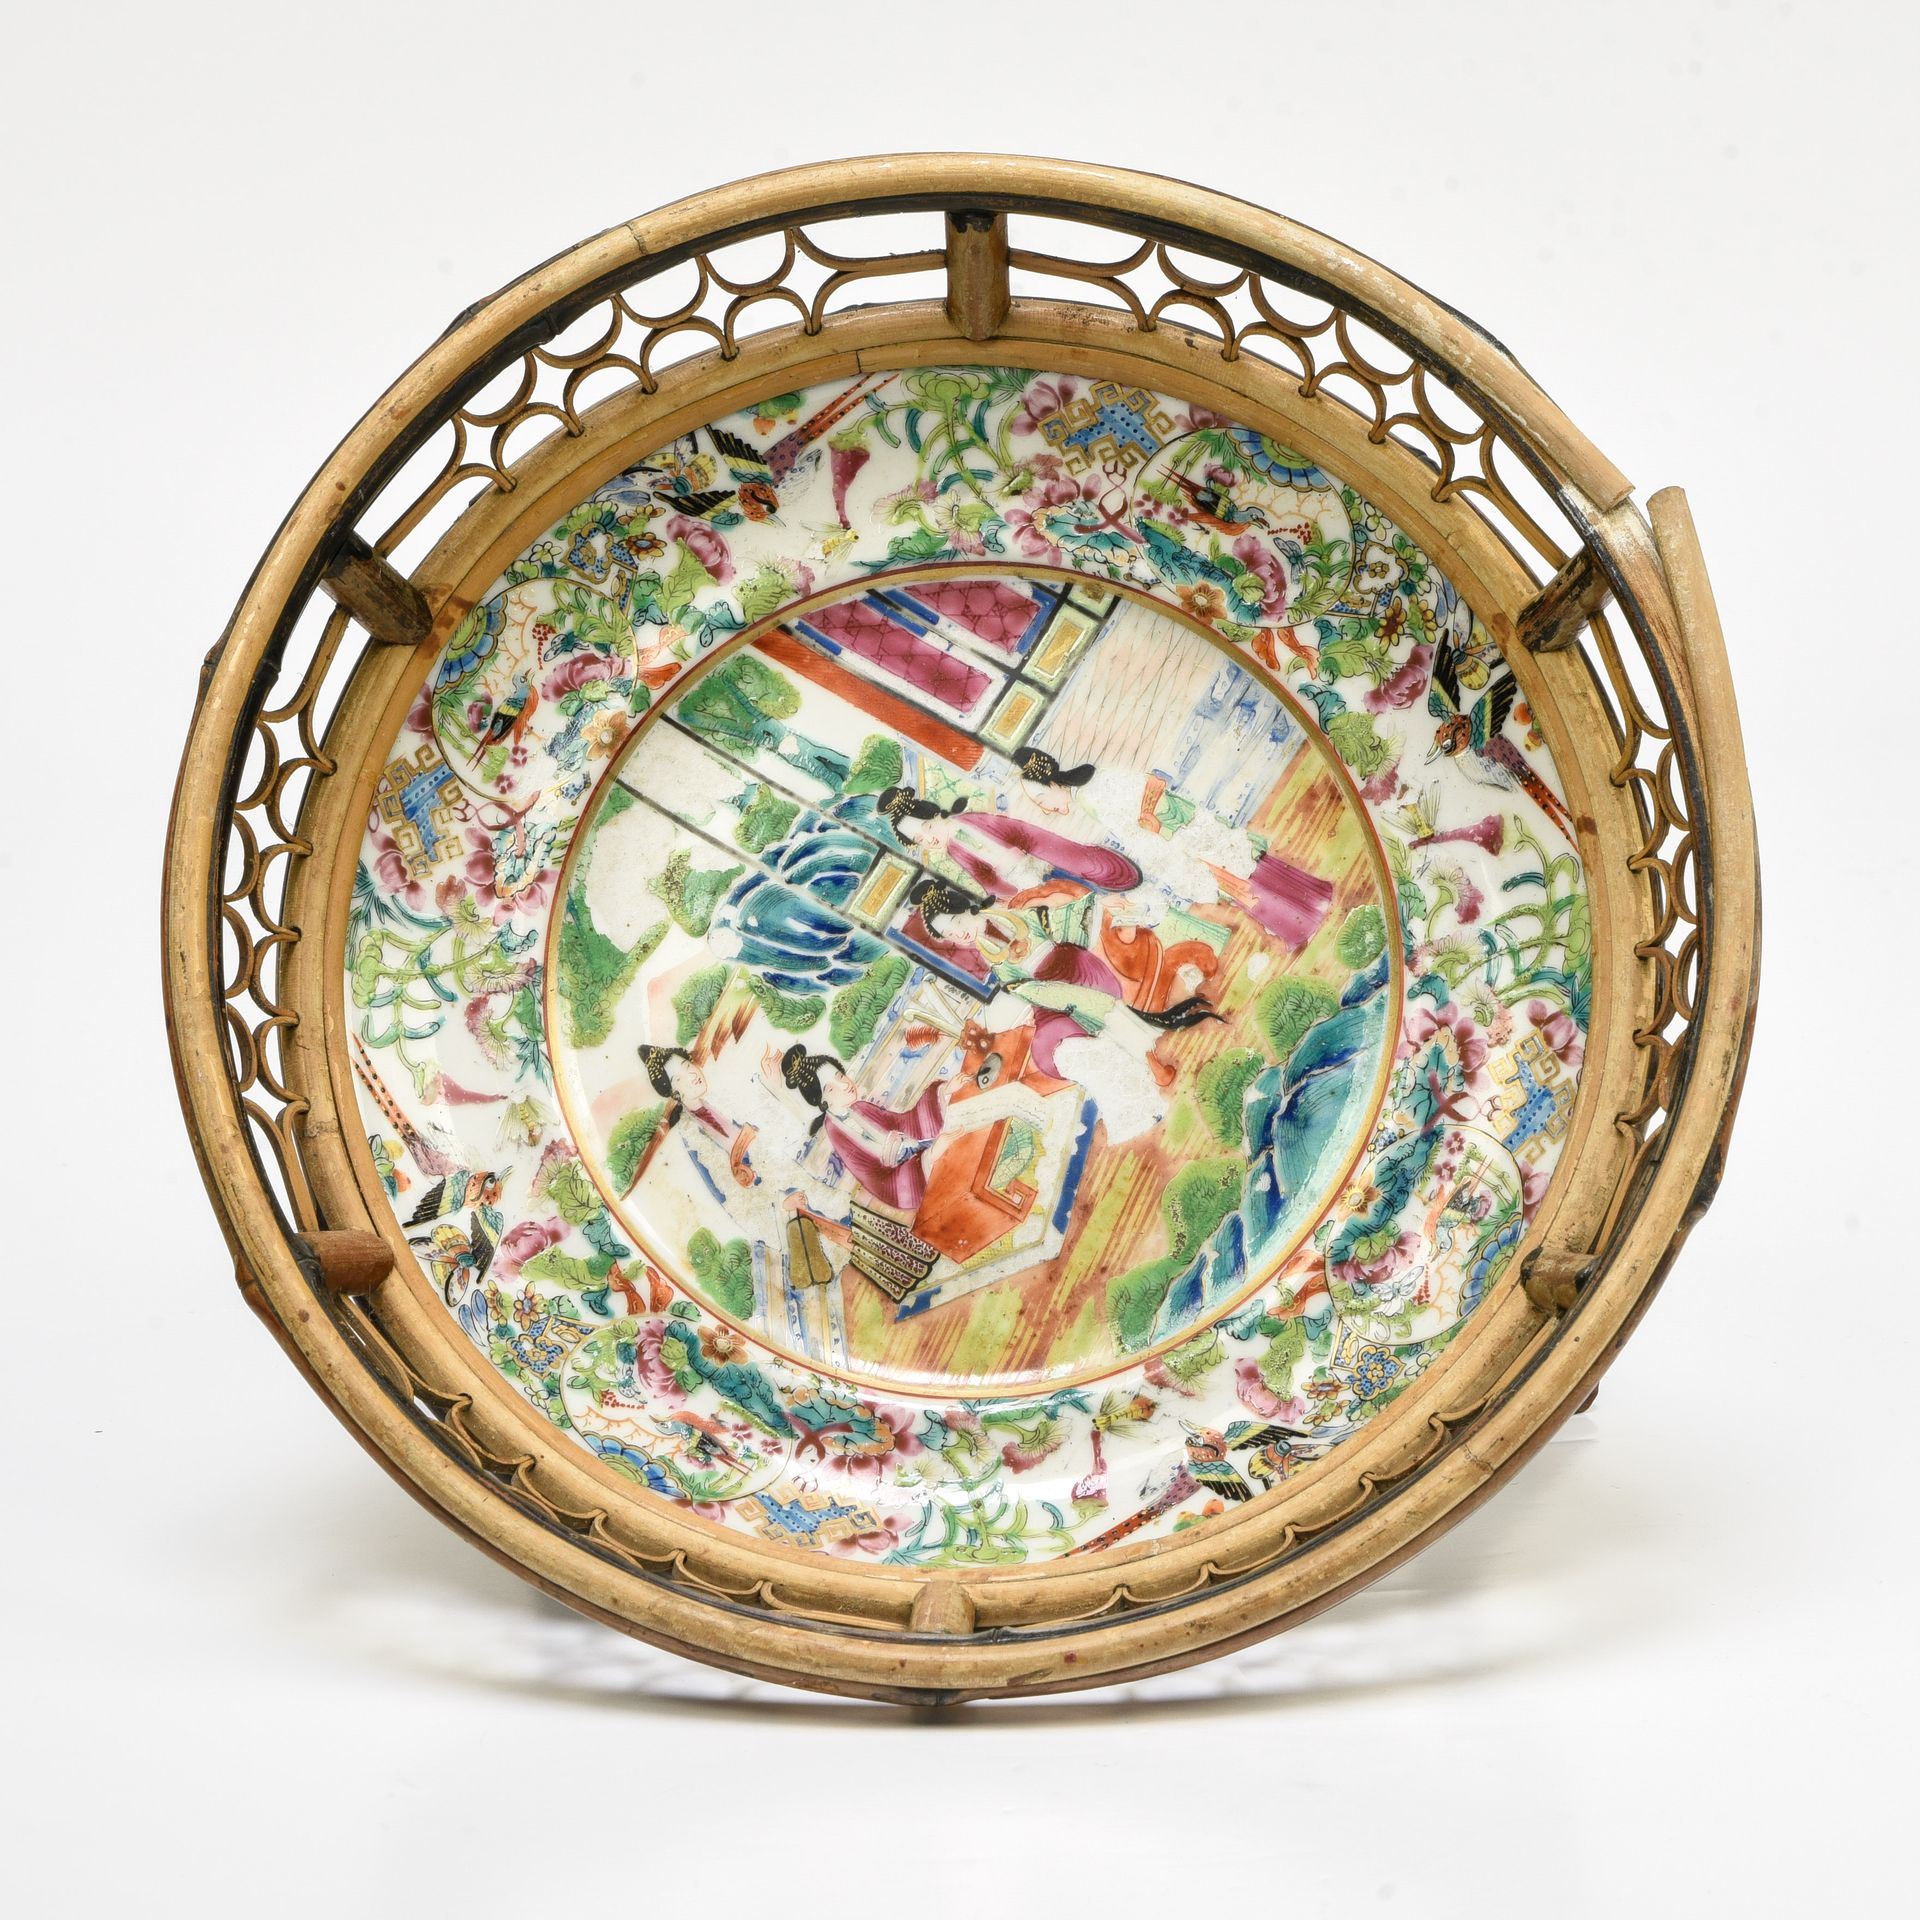 Null CHINA, CANTÓN - SIGLO XIX

Placa



Porcelana esmaltada policromada con muj&hellip;